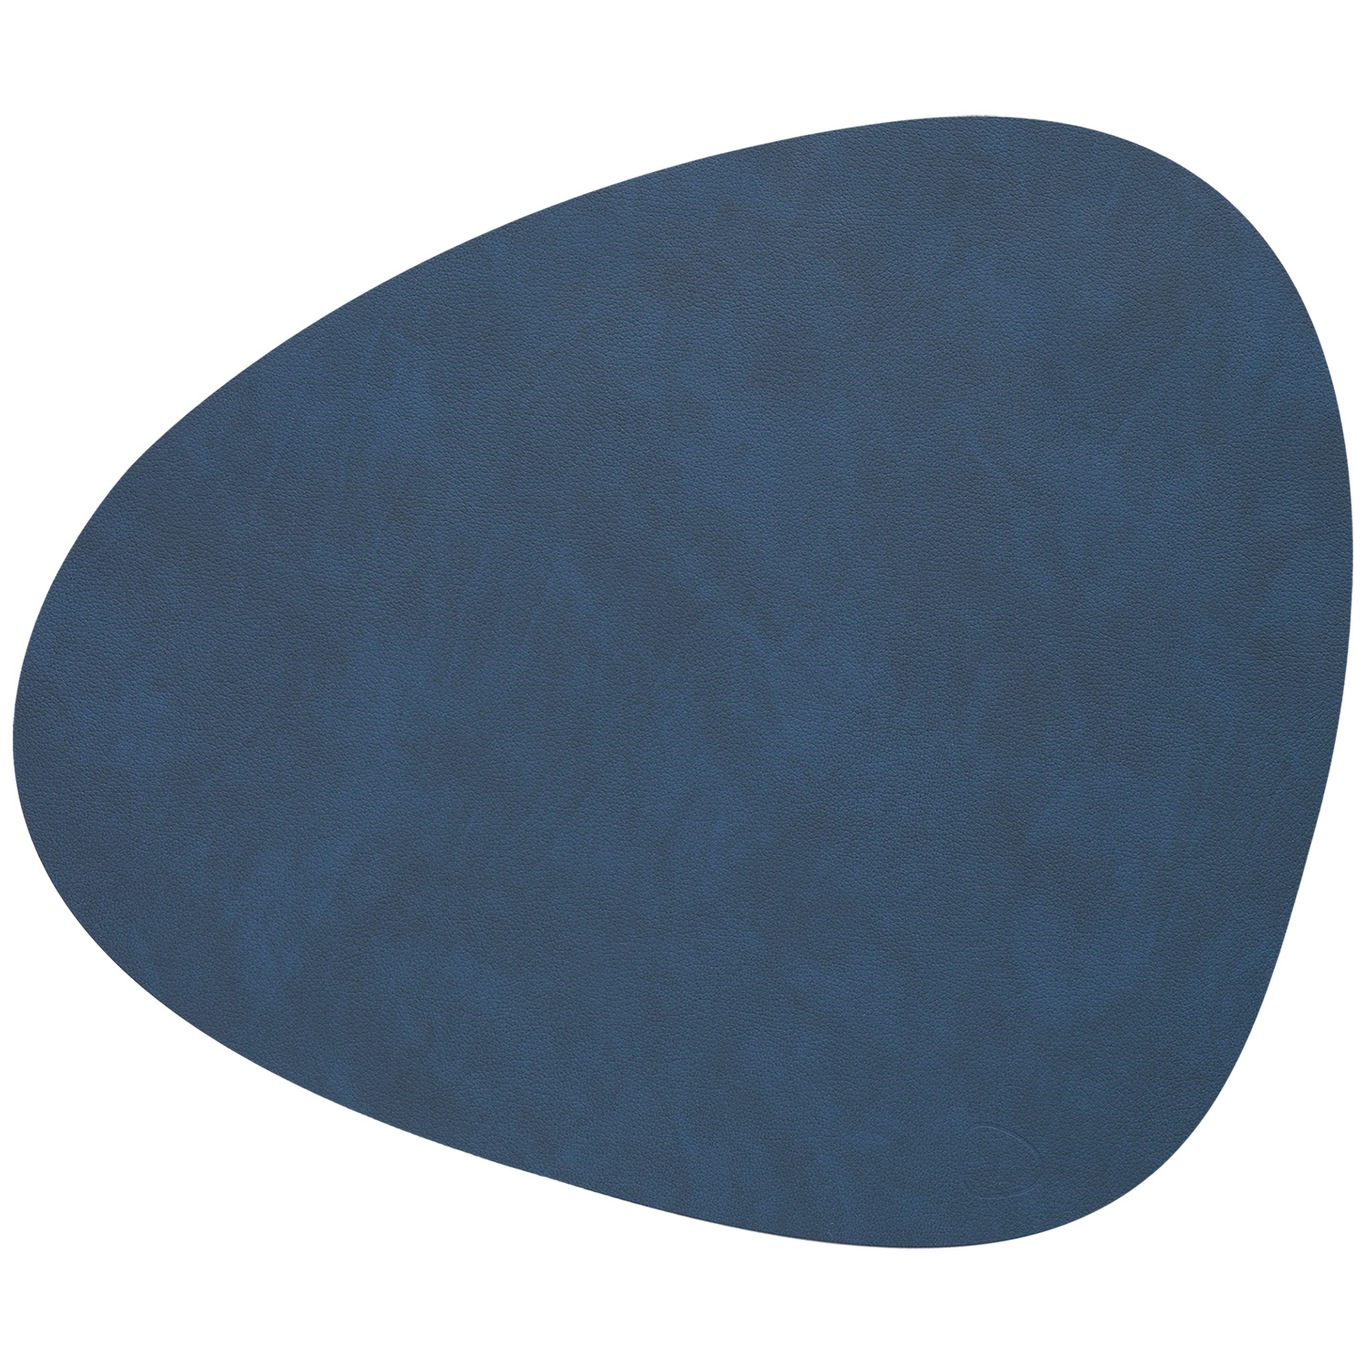 Curve Placemat Nupo 24x28 cm, Midnight Blue